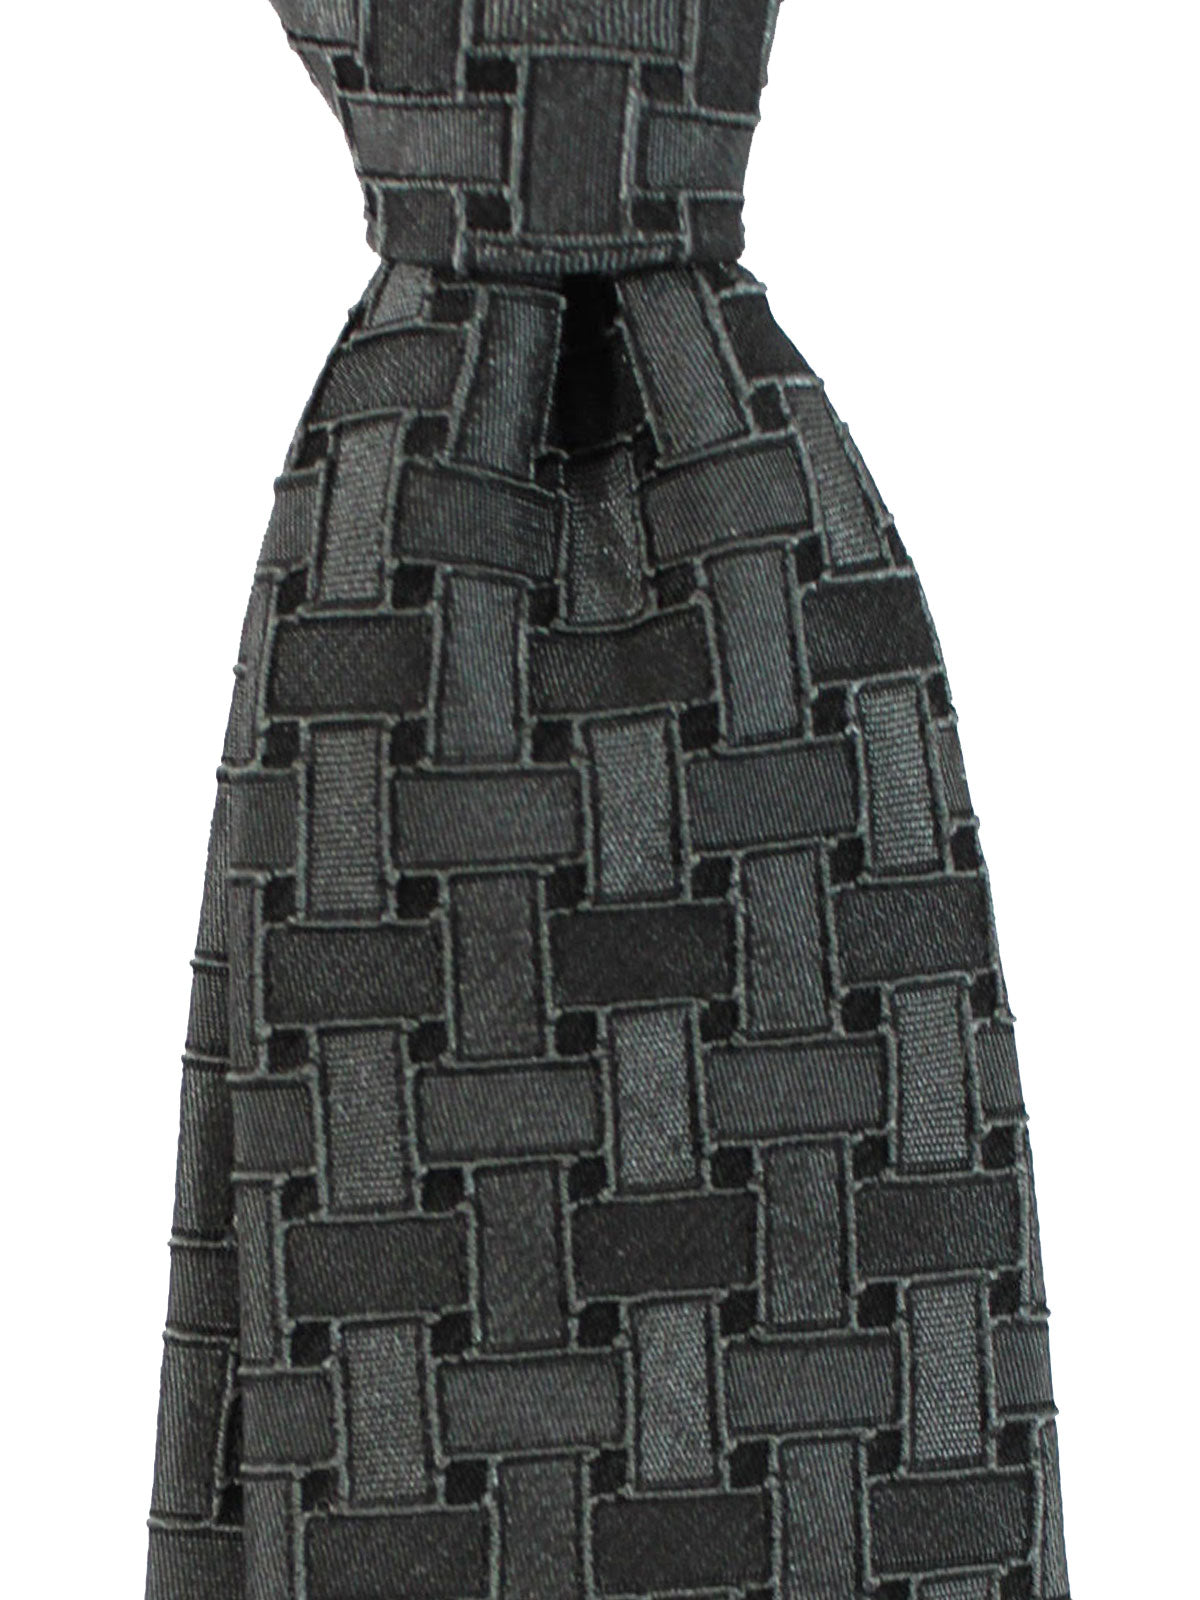 Armani Silk Tie Anthracite Gray Geometric